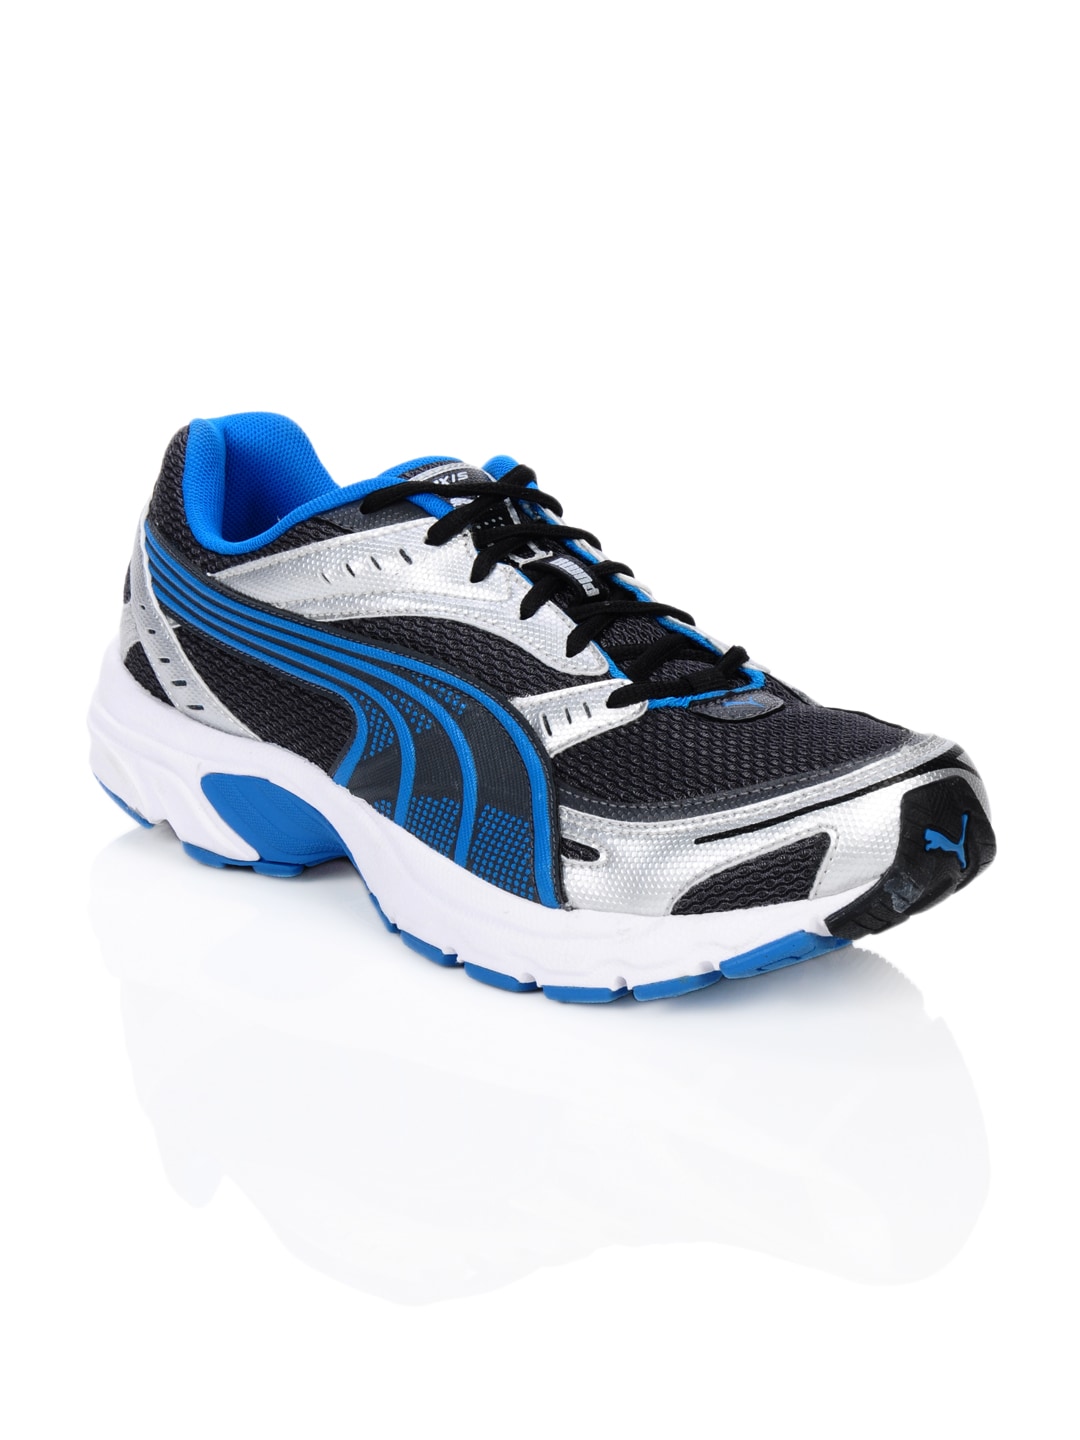 Puma Men Axis Blue & Black Sports Shoes